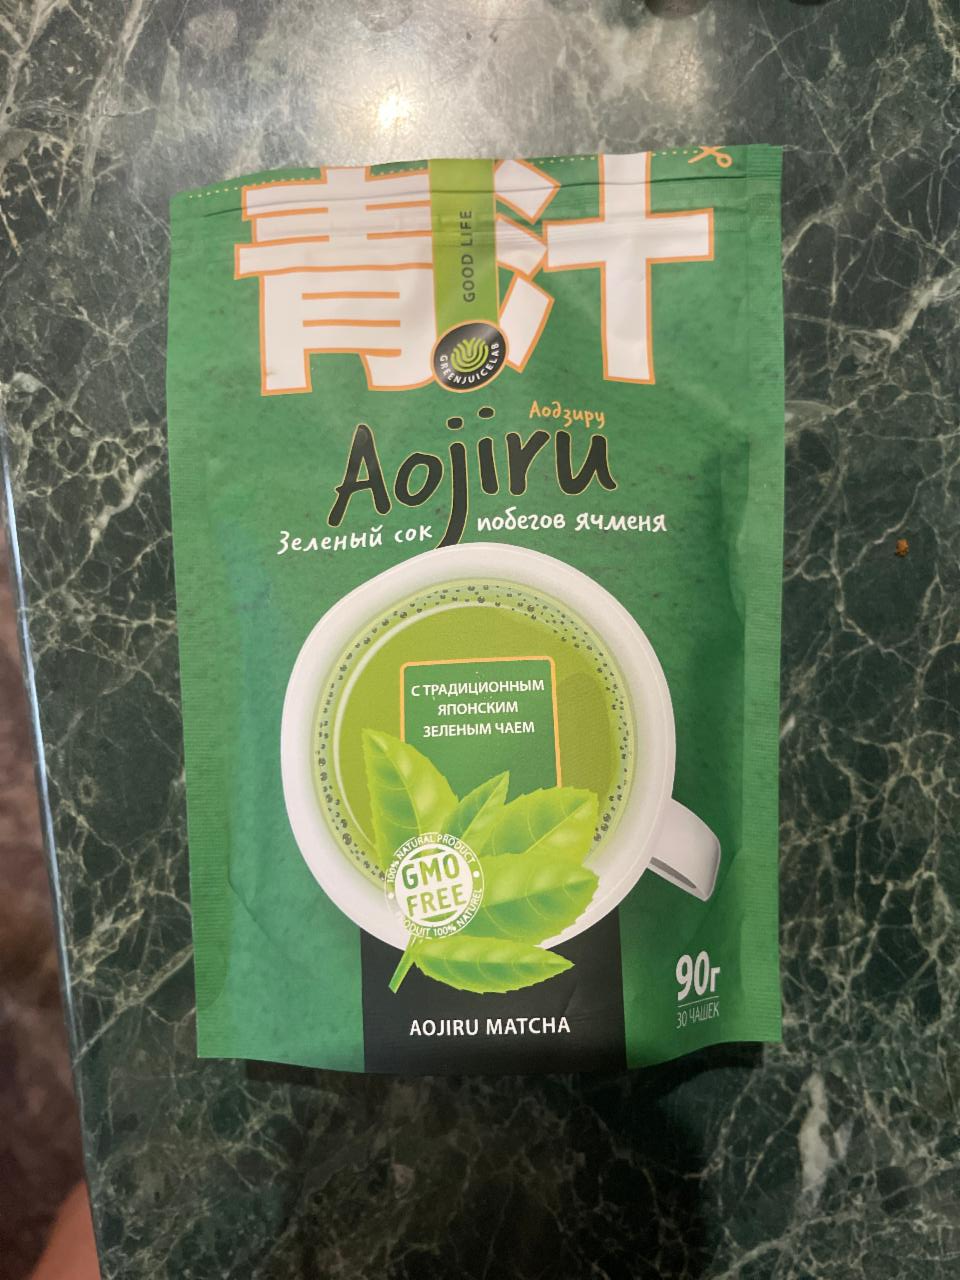 Фото - зеленый сок побегов ячменя Aojiru